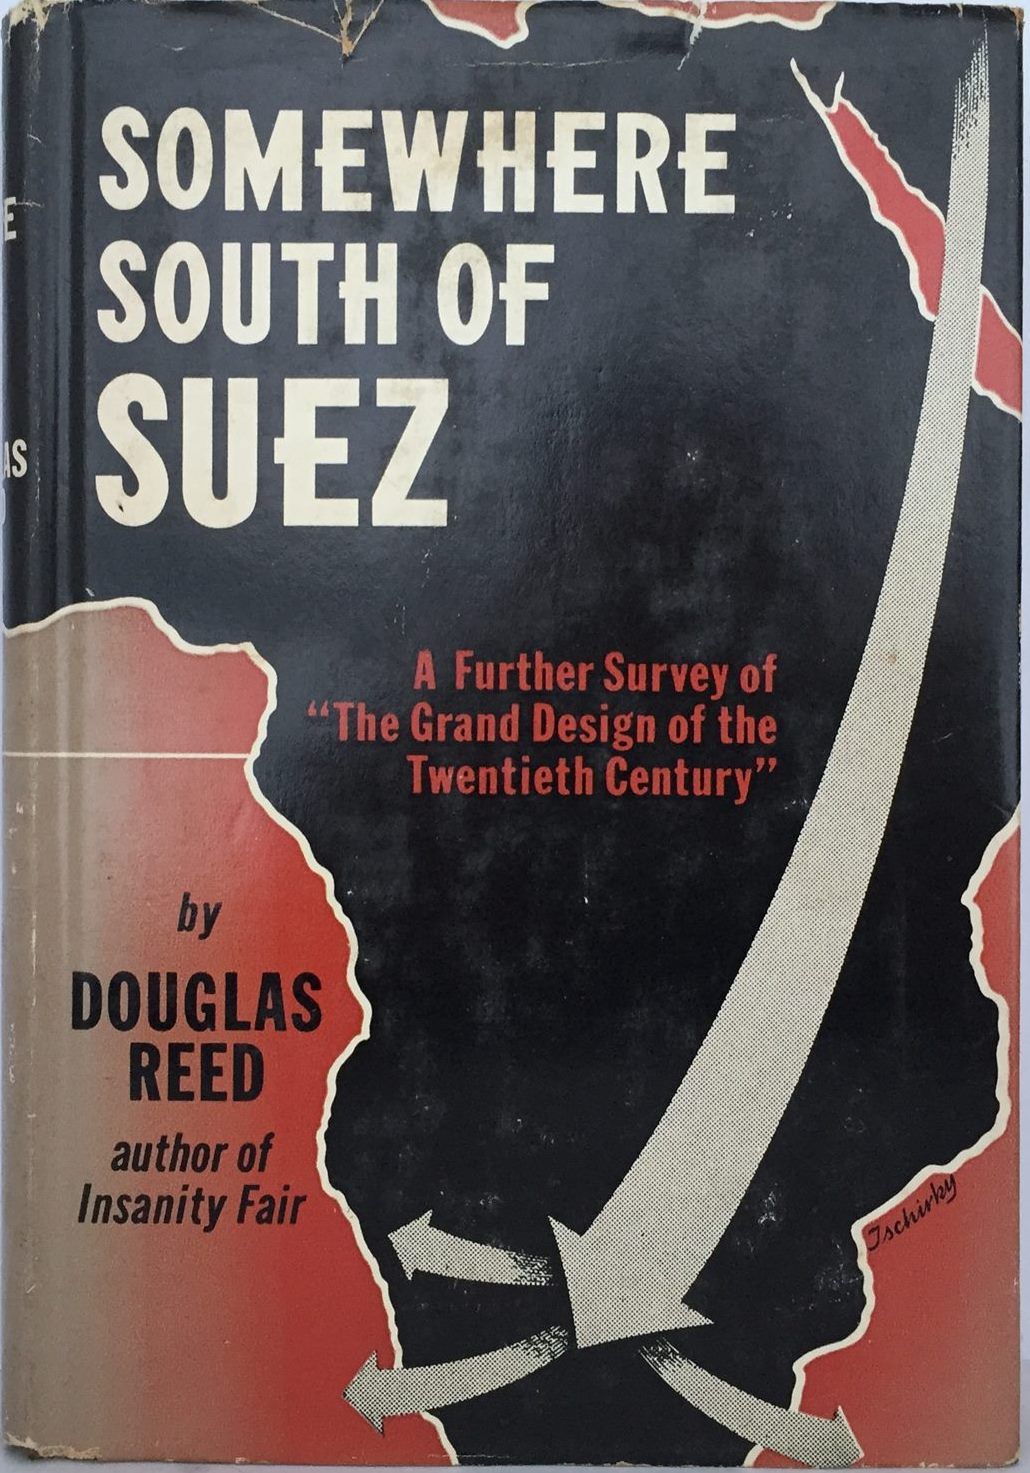 SOMEWHERE SOUTH OF SUEZ: A further survey of The Grand Design of the Twentieth Century